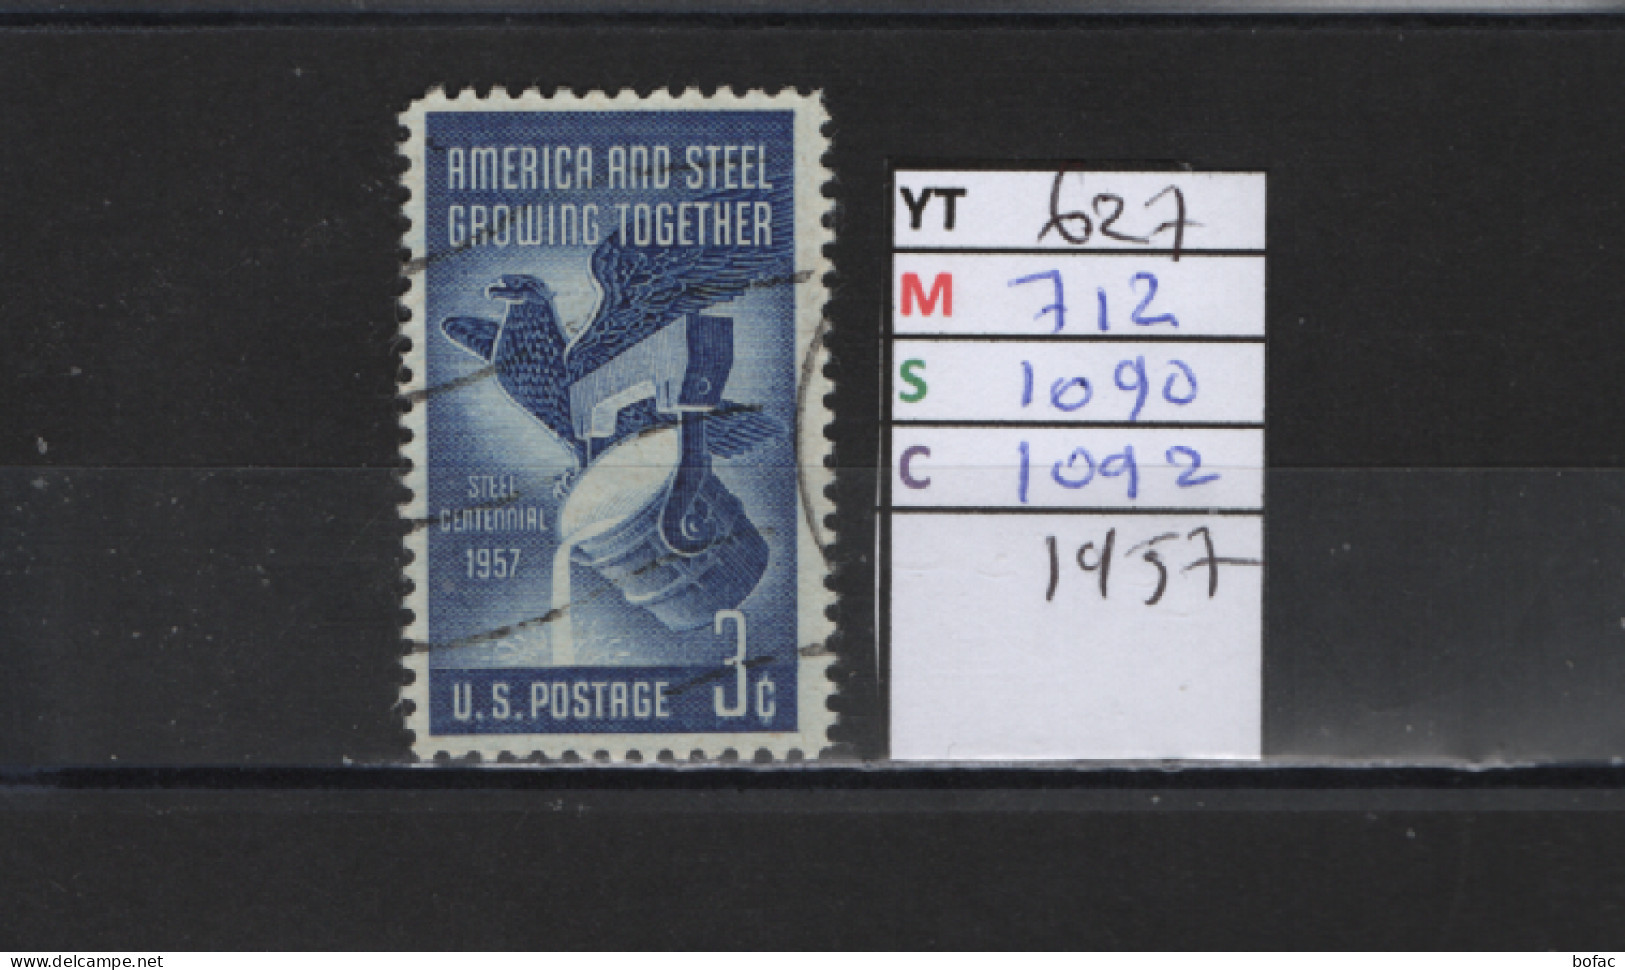 PRIX FIXE Obl  627 YT 712 MIC 1090 SCO 1092 GIB Industrie Sidérurgique Creuset 1957 S Etats Unis  58A/07 - Used Stamps